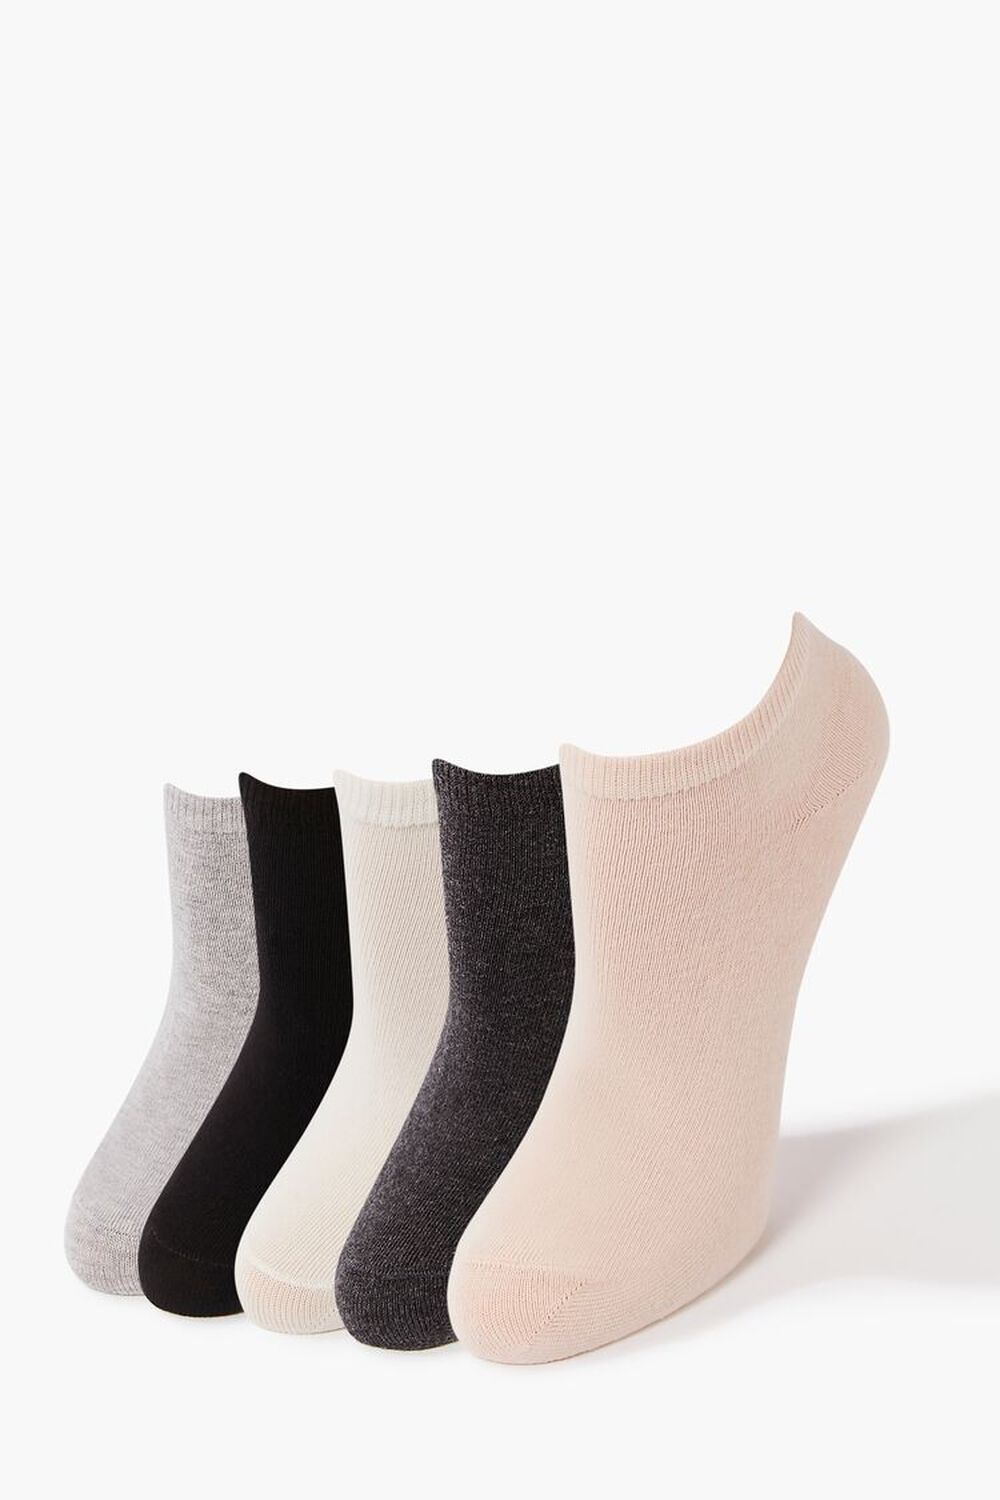 BLACK/PEACH  Ankle Sock Set - 5 pack, image 1